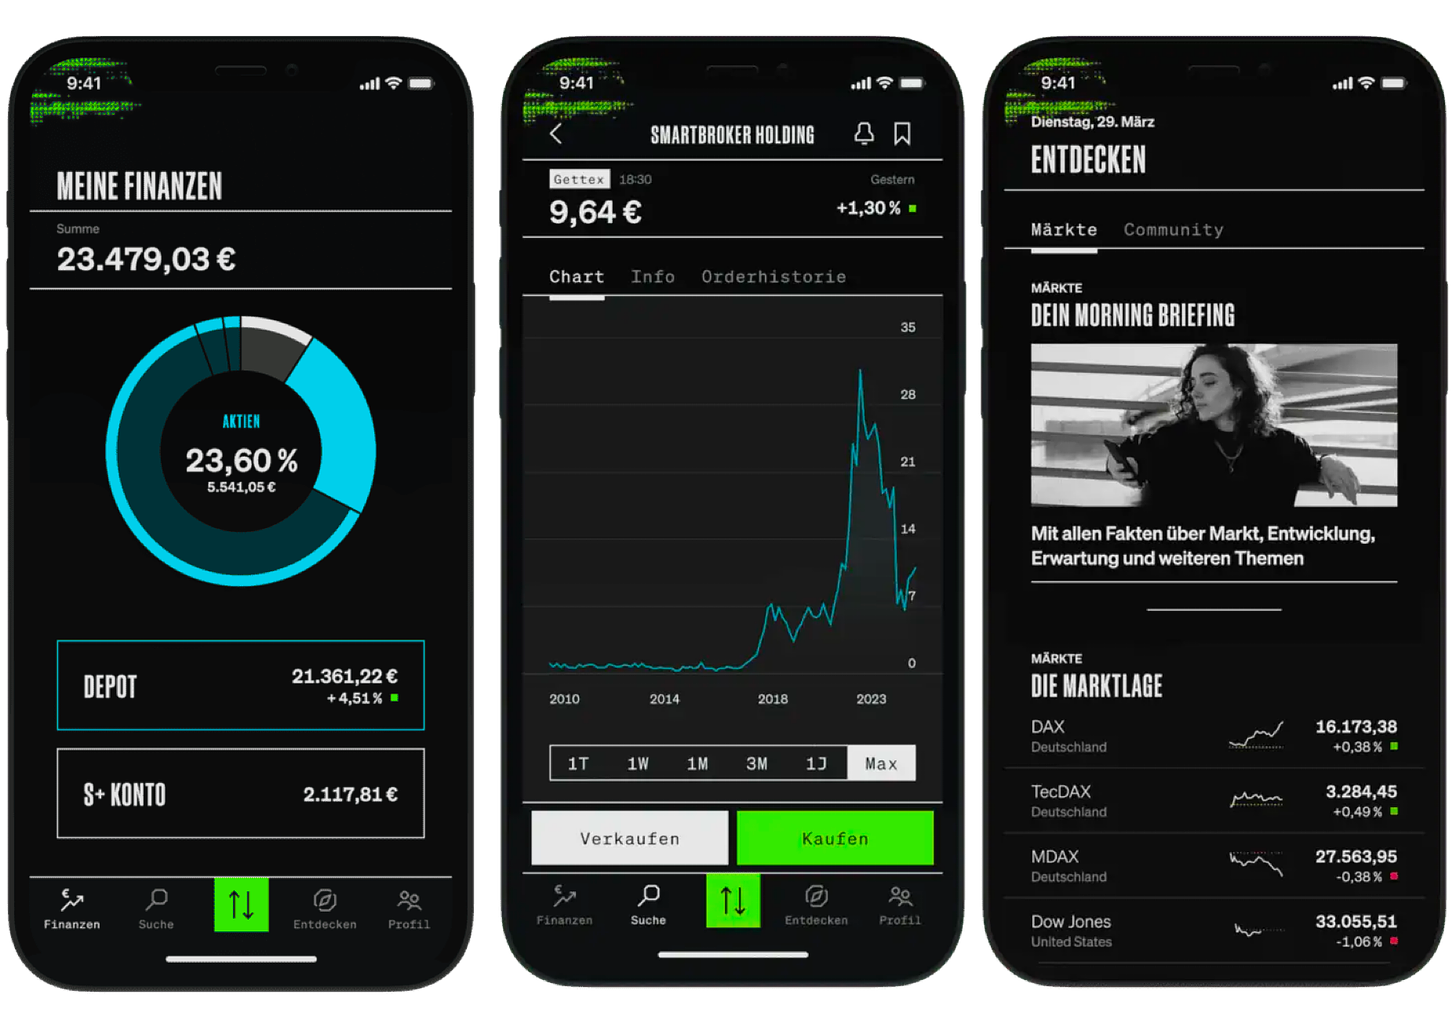 Screens of the Smatbroker+ App